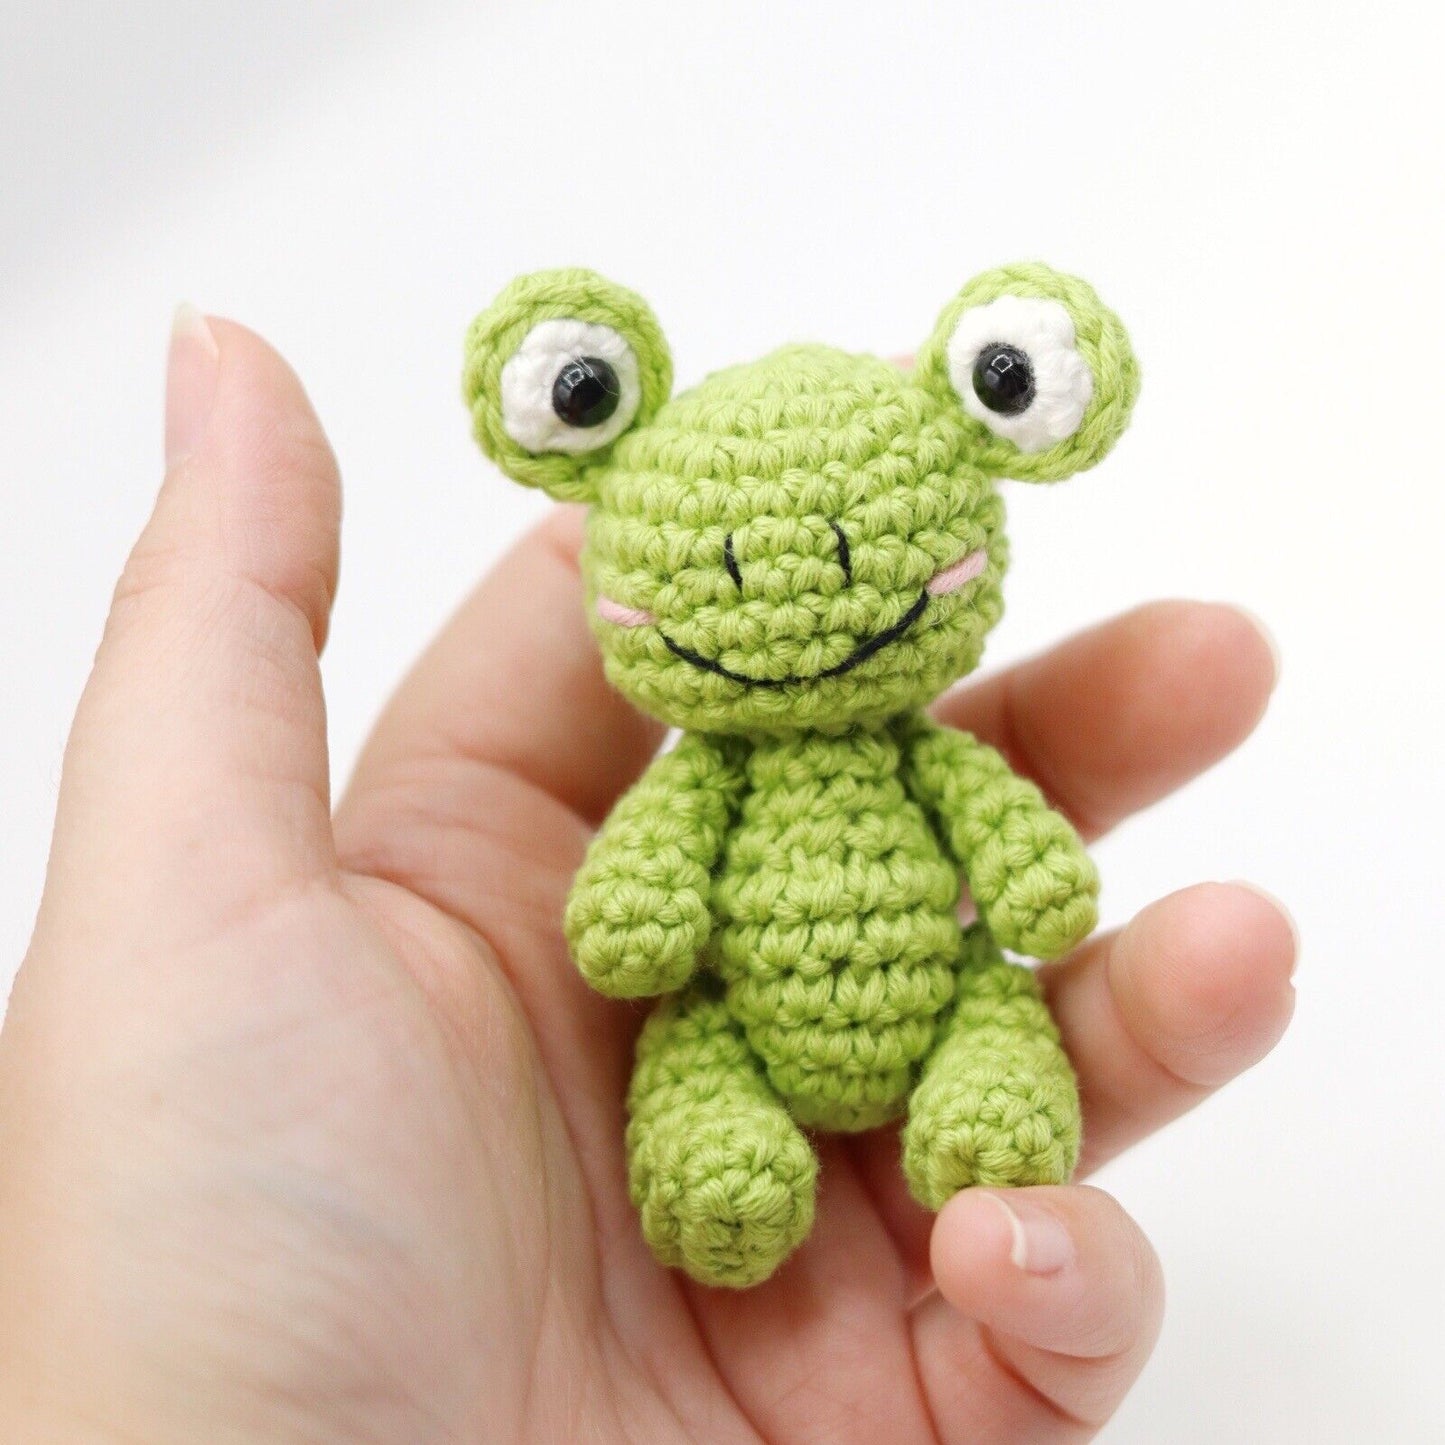 Handmade crochet small toys